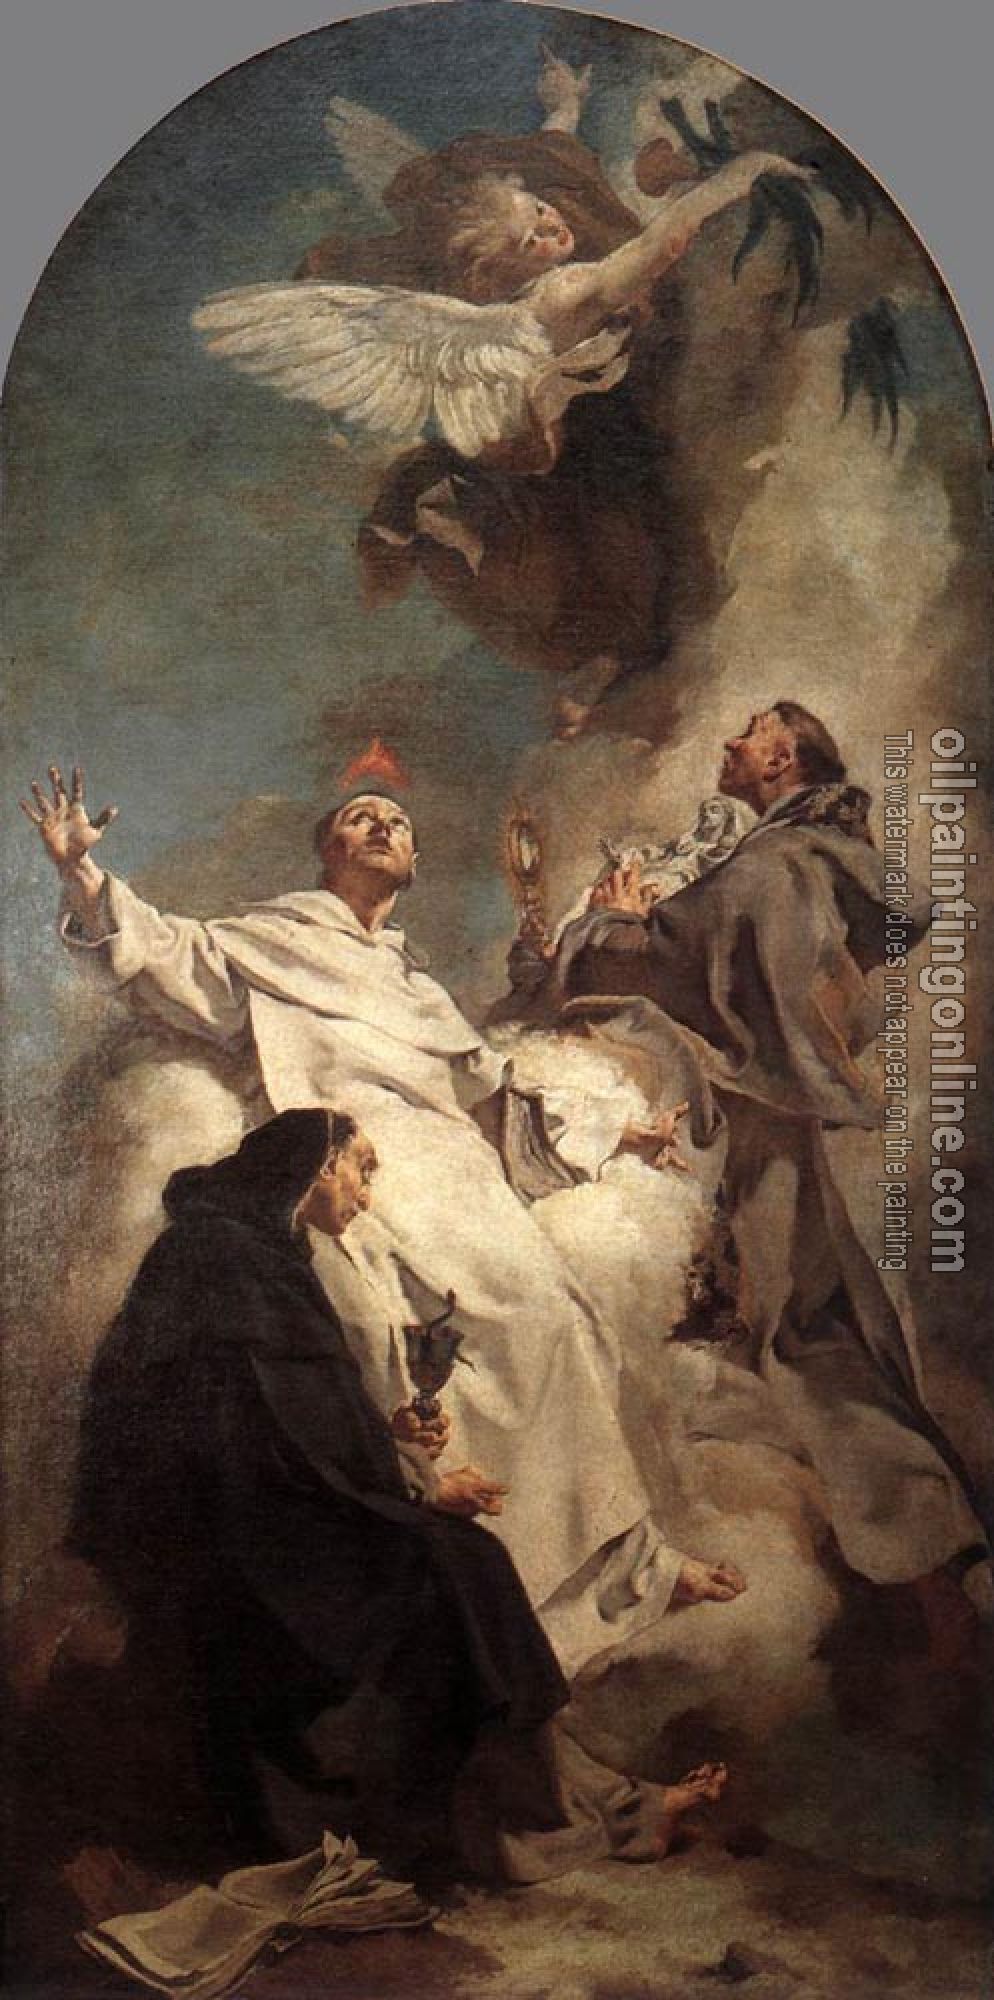 Piazzetta, Giovanni Battista - Three Dominican Saints